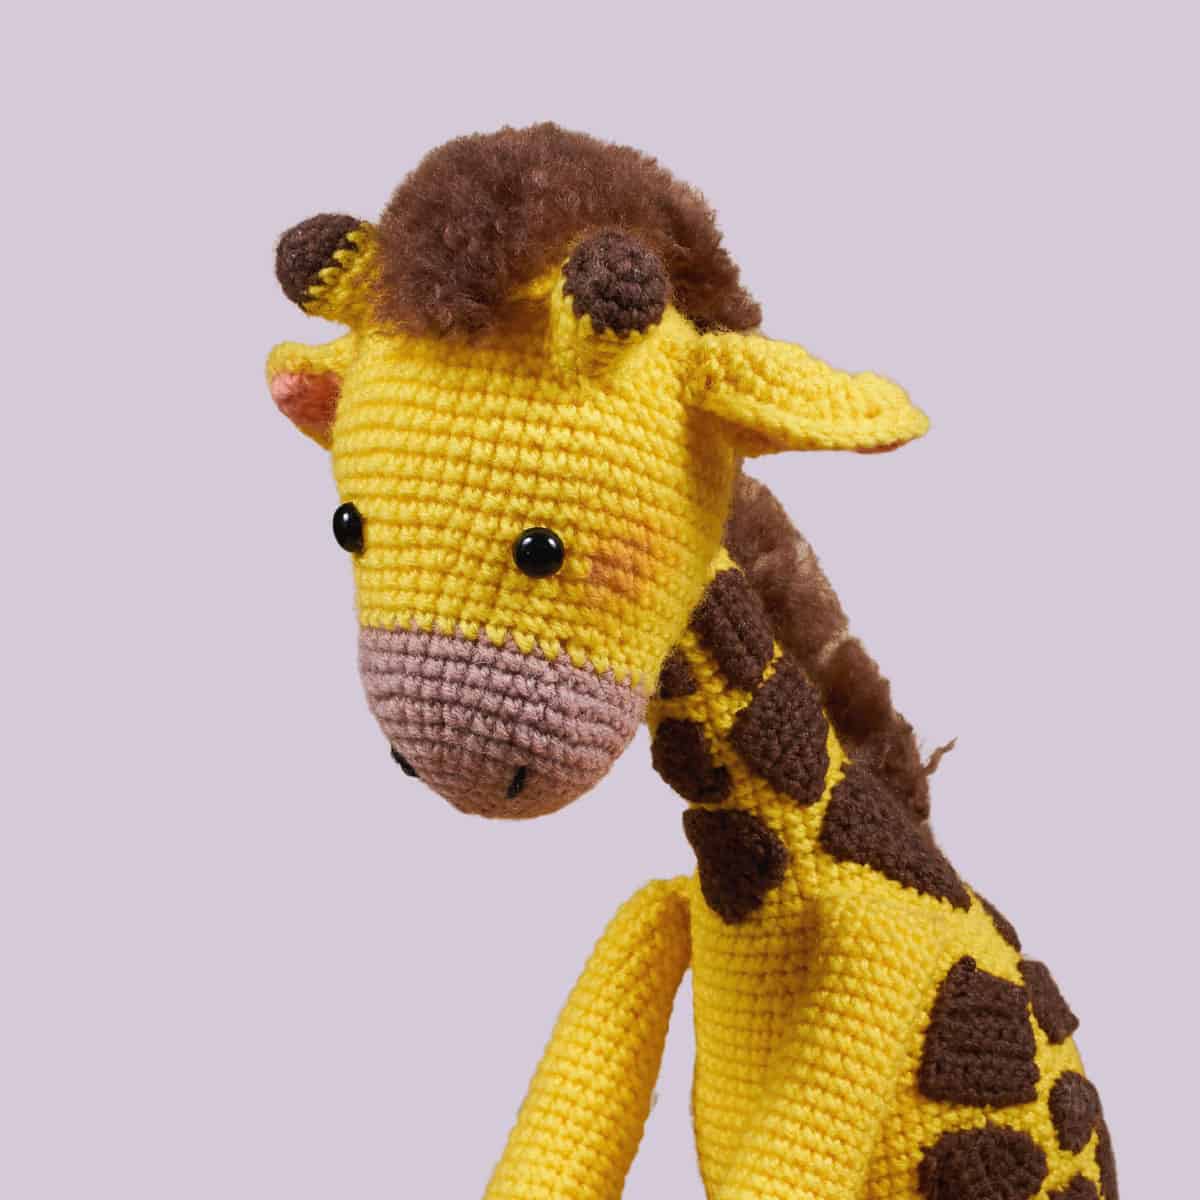 Close-up shot of a crochet giraffe amigurumi doll on a white background.